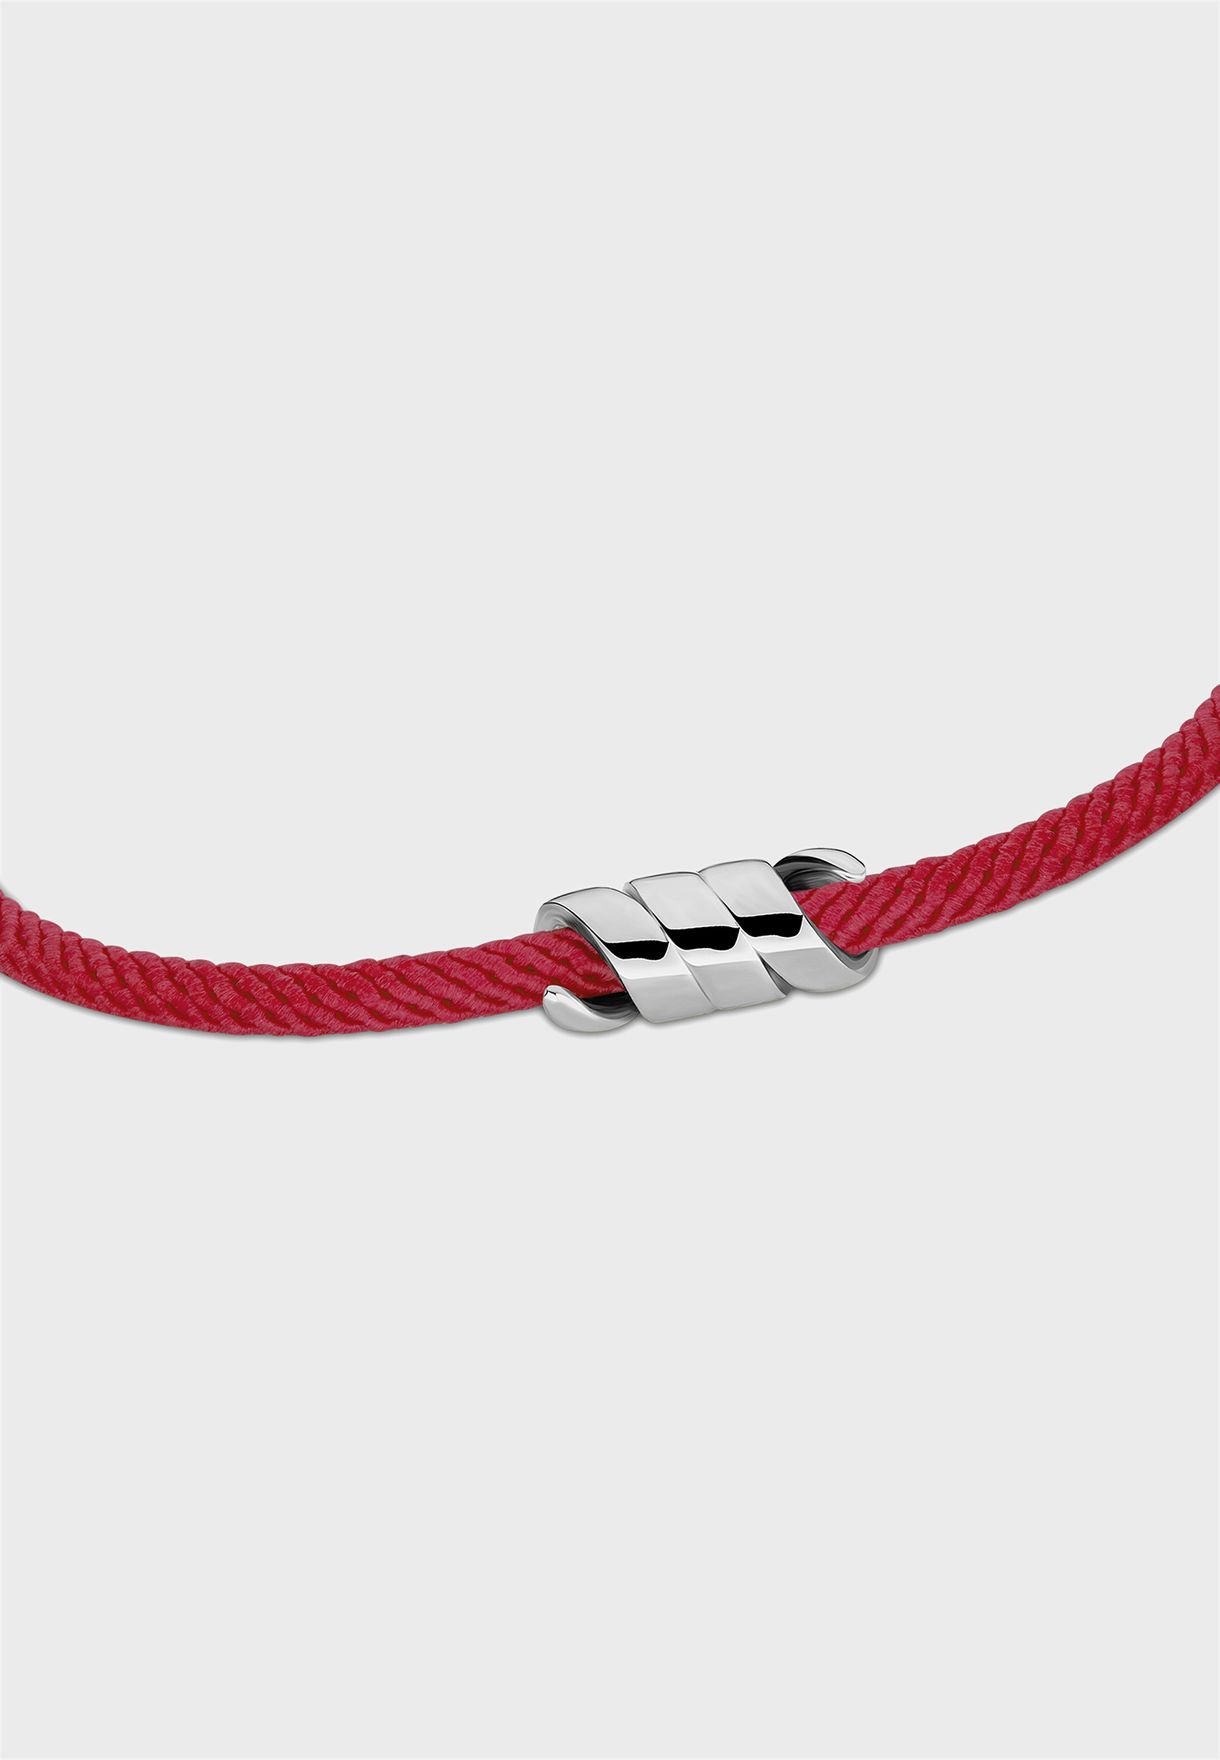 Barbed Wire Bracelet